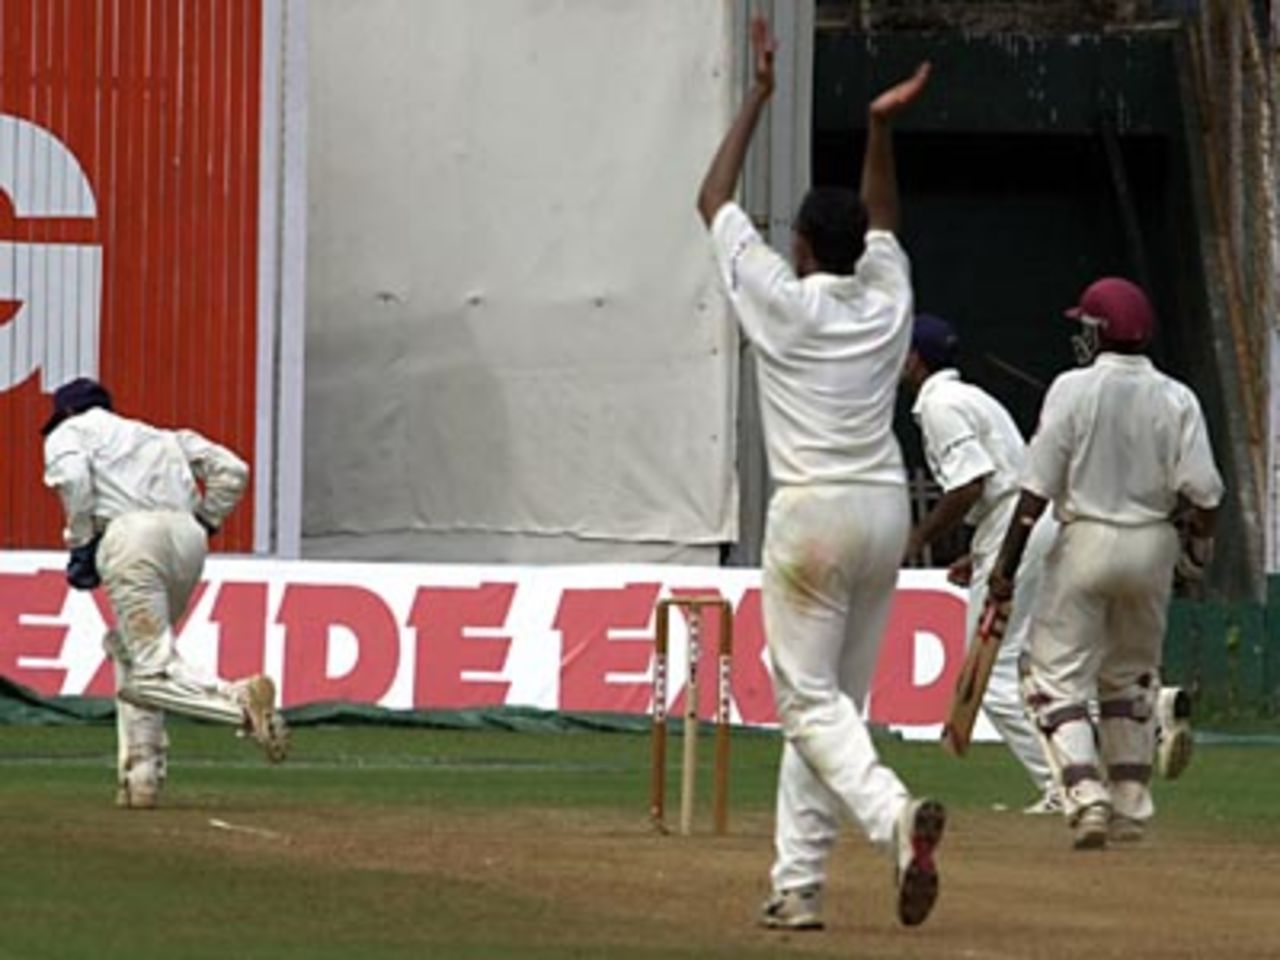 1st Test: India v West Indies at Mumbai, 9-13 October 2002